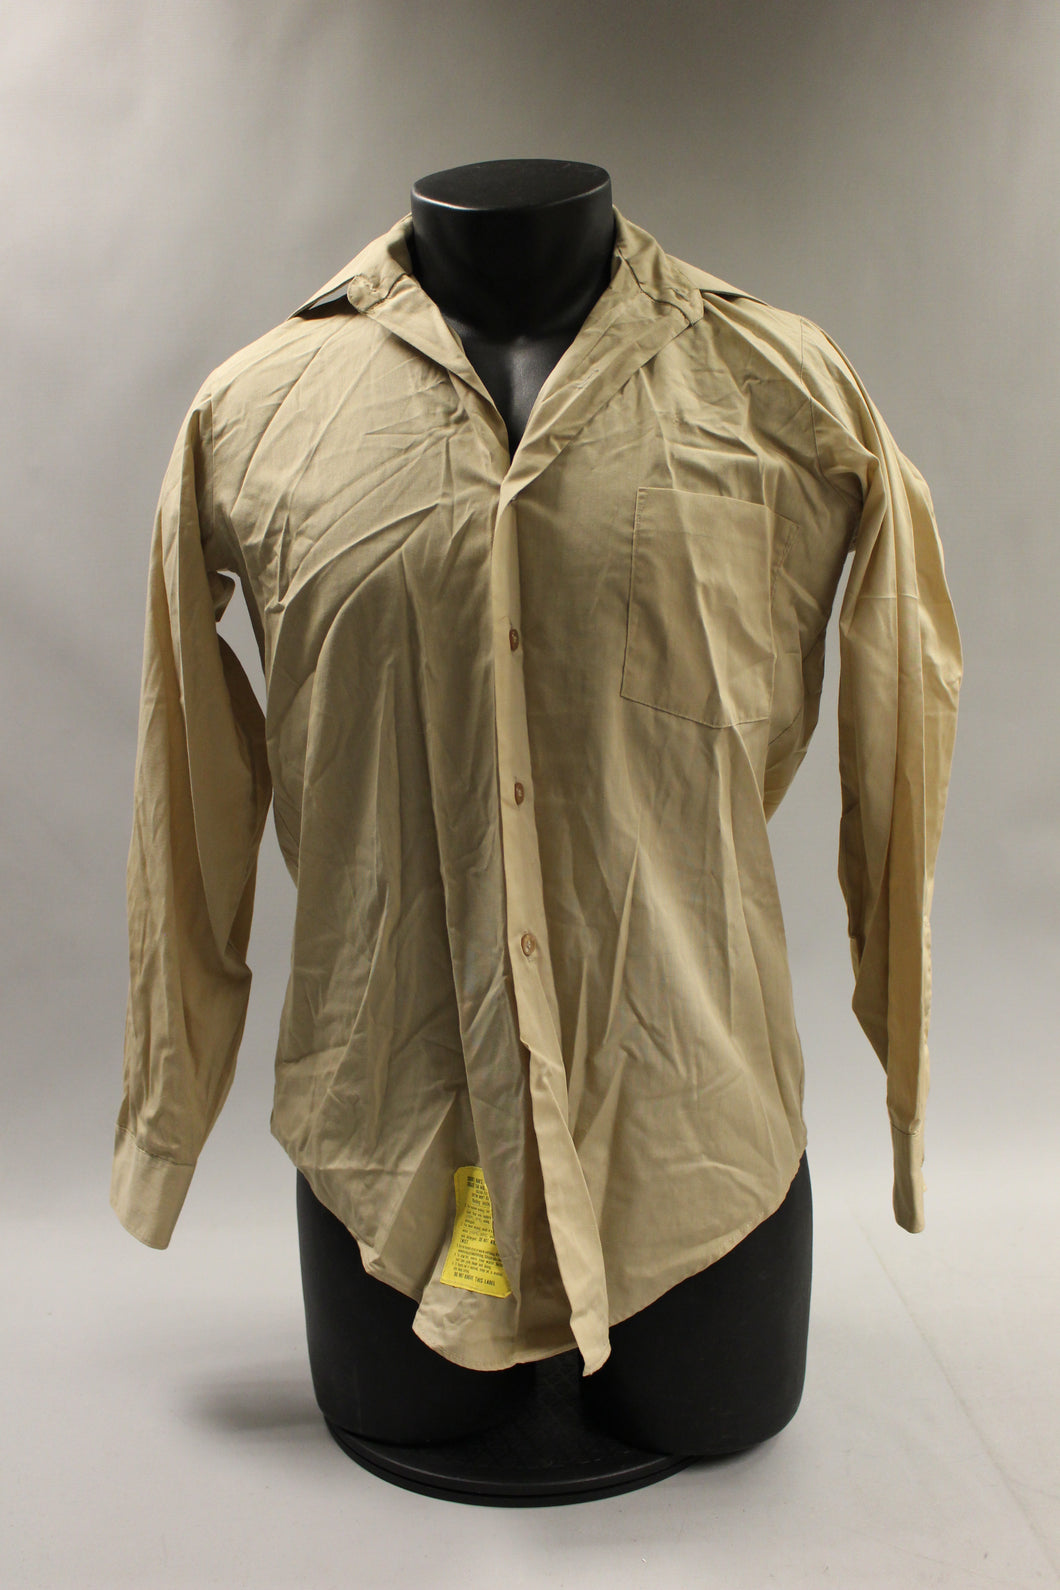 US Army Vietnam Era Long Sleeve Cotton / Poly Shirt - Tan 446 - 14.5x32